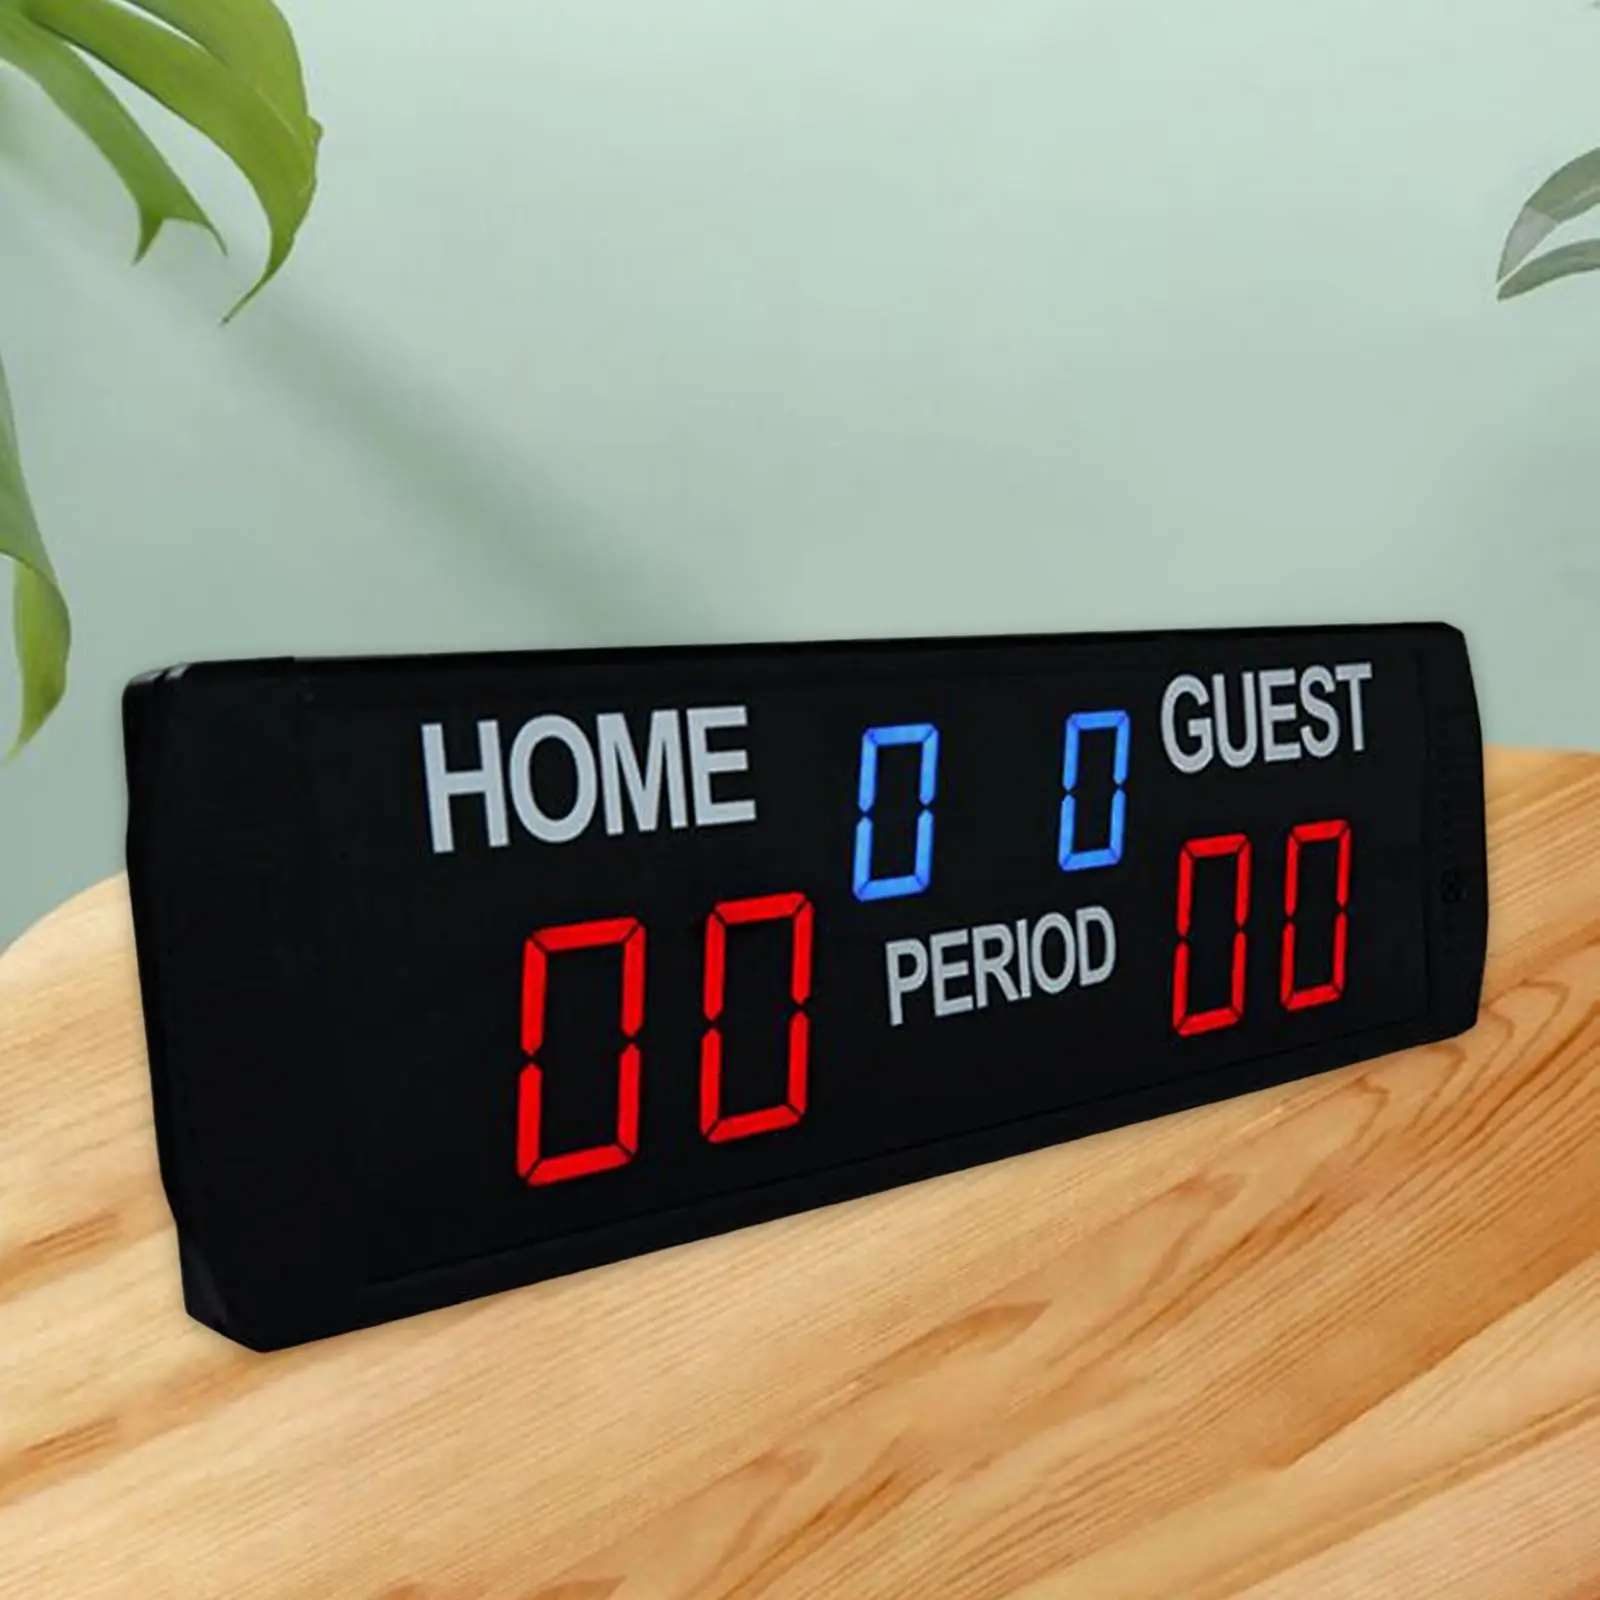 Portable Scoreboard Digital Electronic Wall Mount LED Score Board for Gymnasium Basketball Scores Score Keeper Pingpong Pong